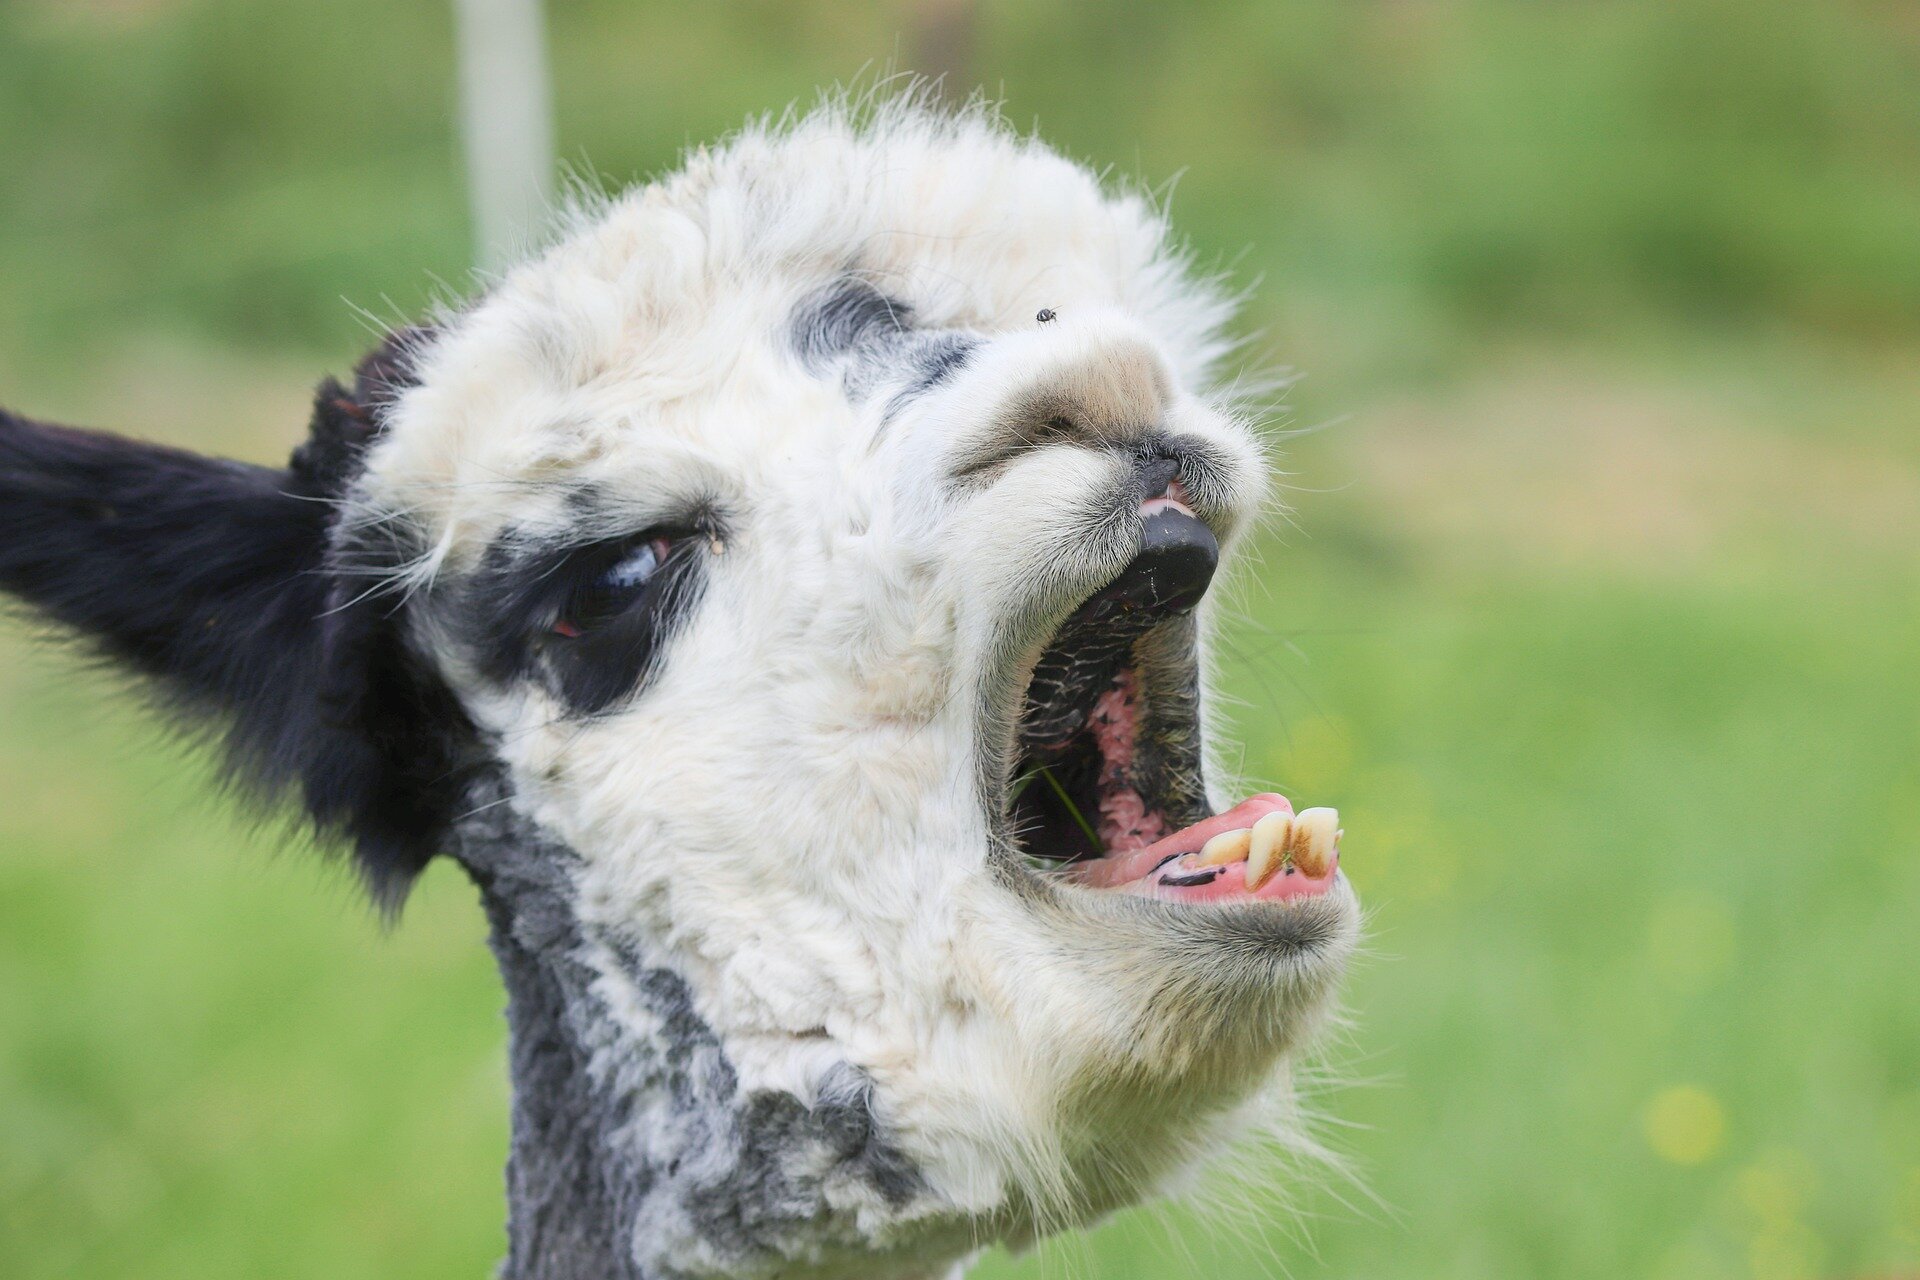 'Llama magic': How antibodies from llamas may lead to COVID-19 treatment